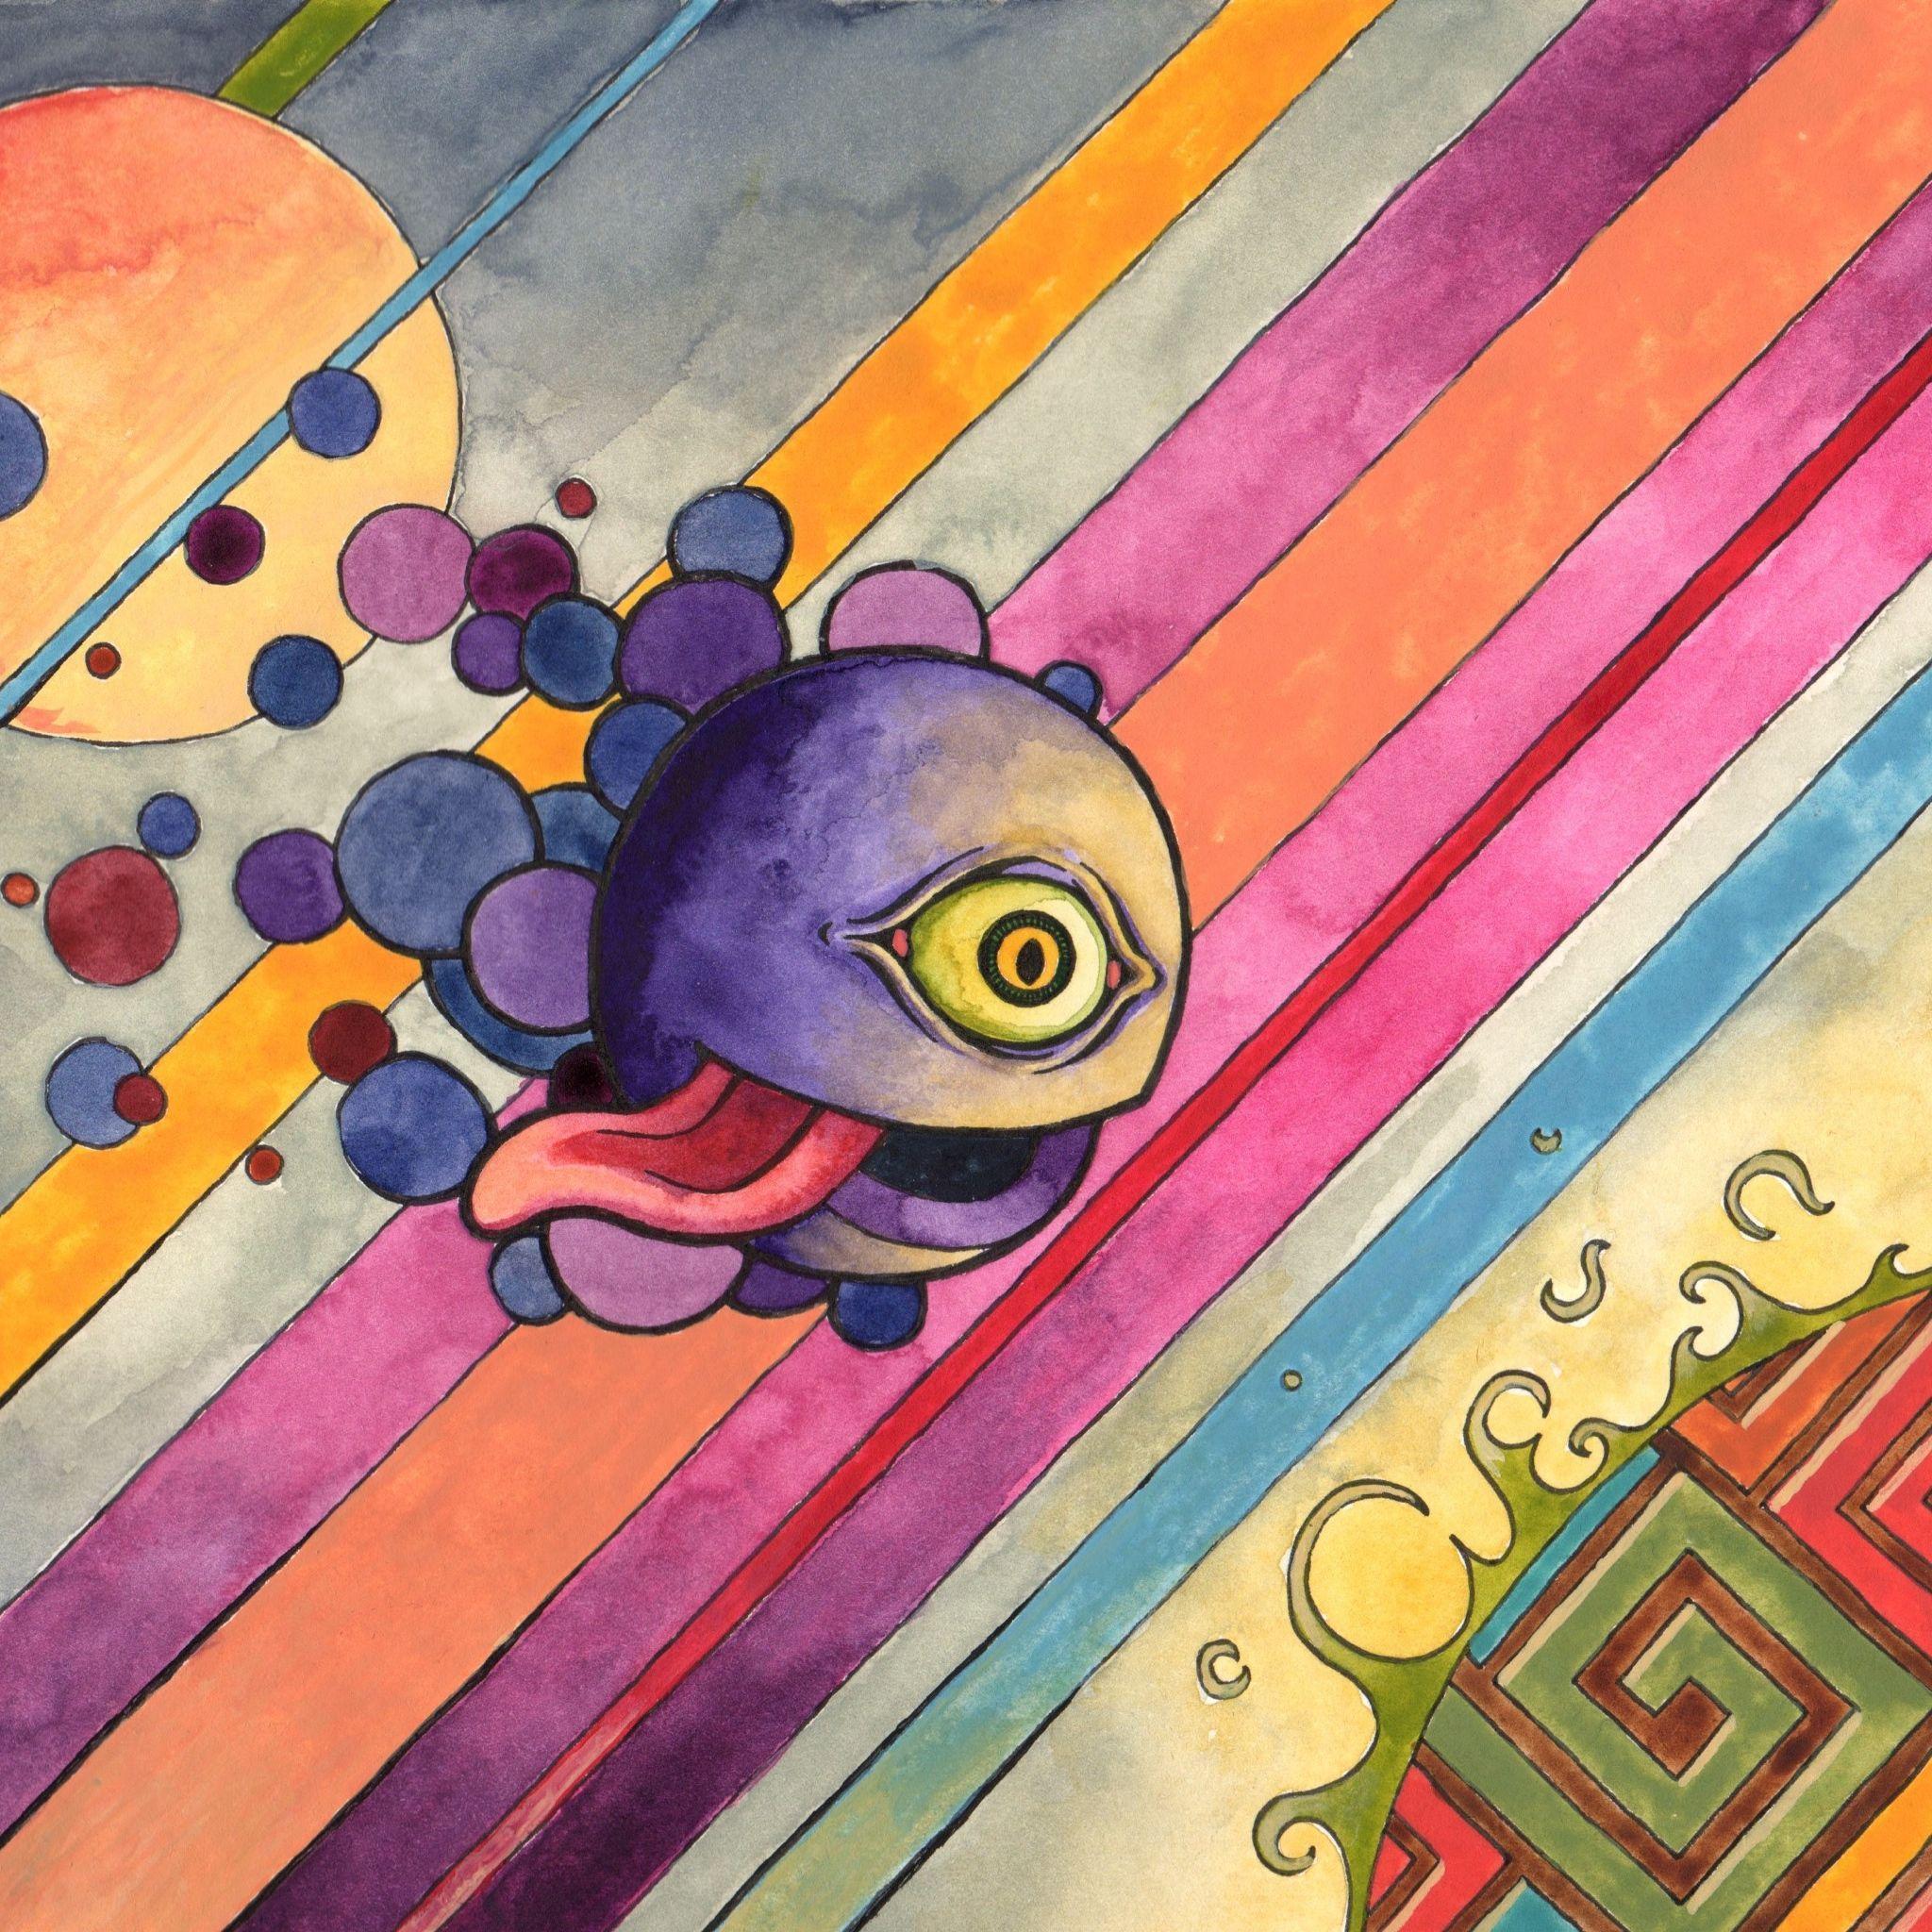 Painting Monster iPad Air Wallpaper Download. iPhone Wallpaper